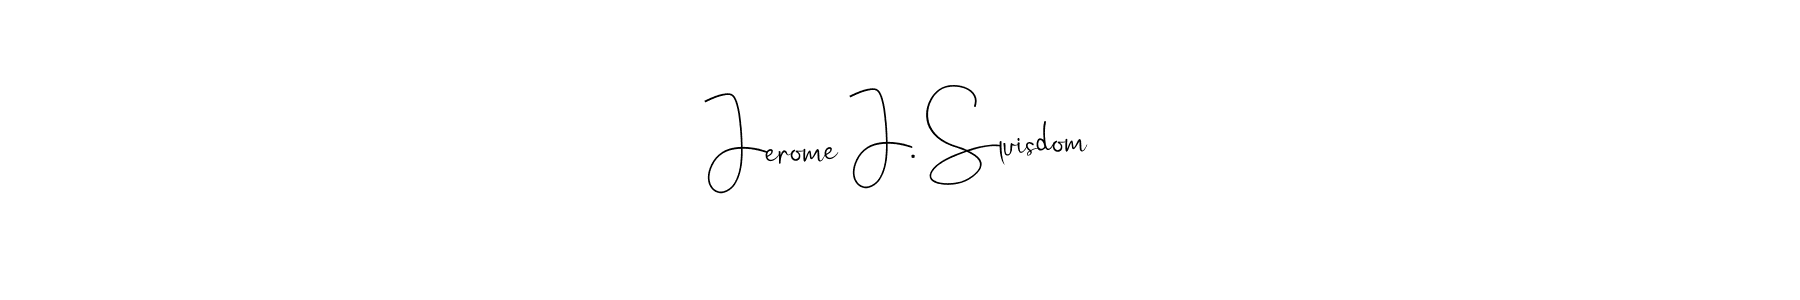 Make a beautiful signature design for name Jerome J. Sluisdom. Use this online signature maker to create a handwritten signature for free. Jerome J. Sluisdom signature style 4 images and pictures png